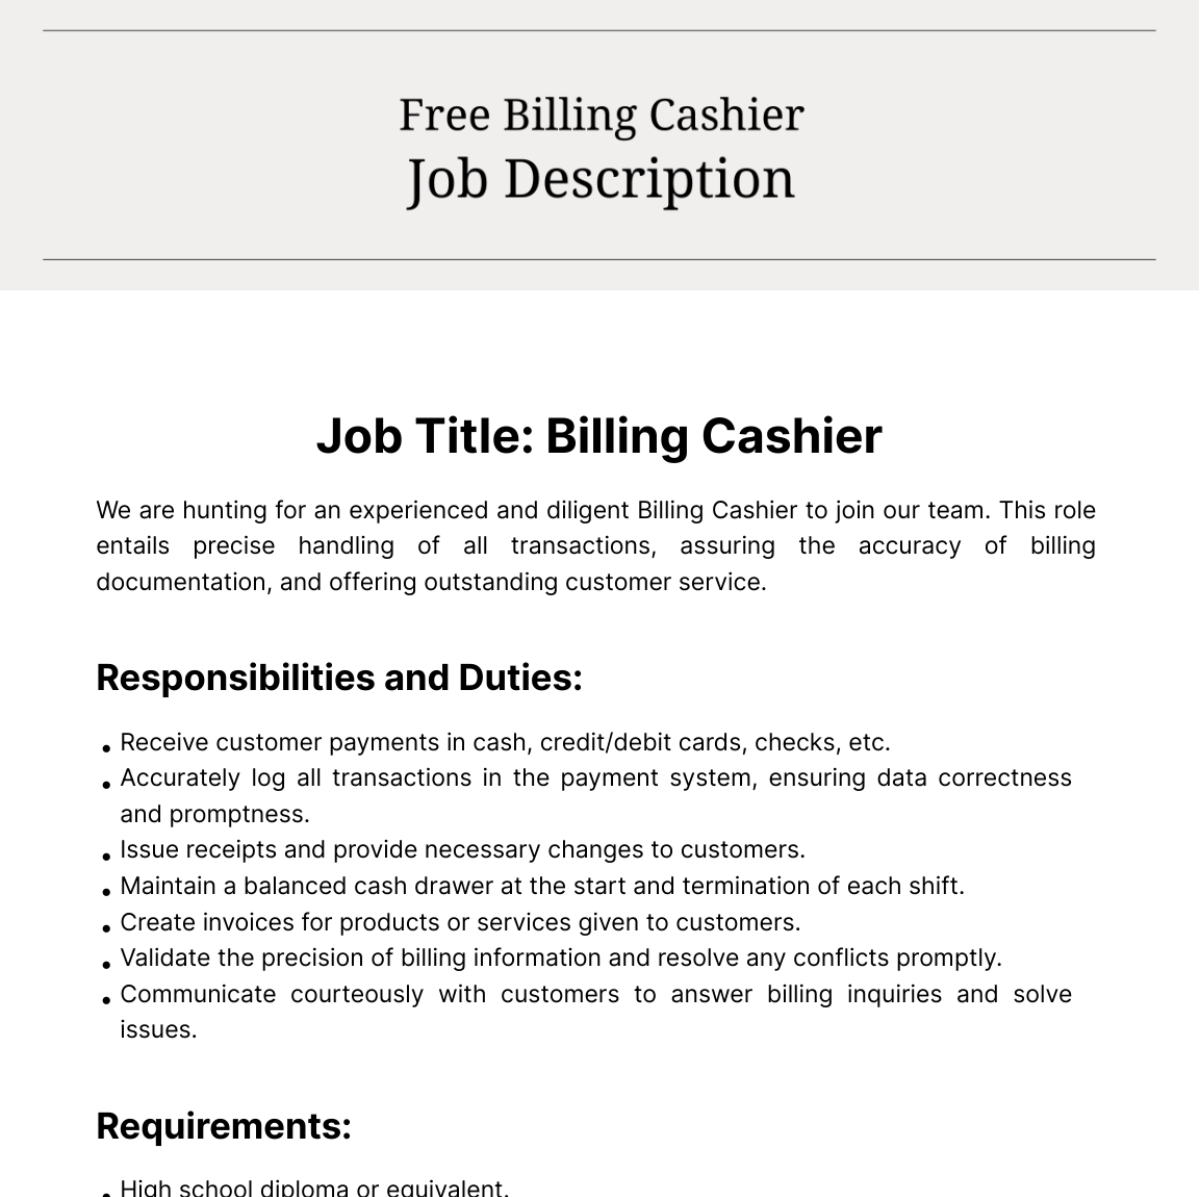 Free Billing Cashier Job Description Template